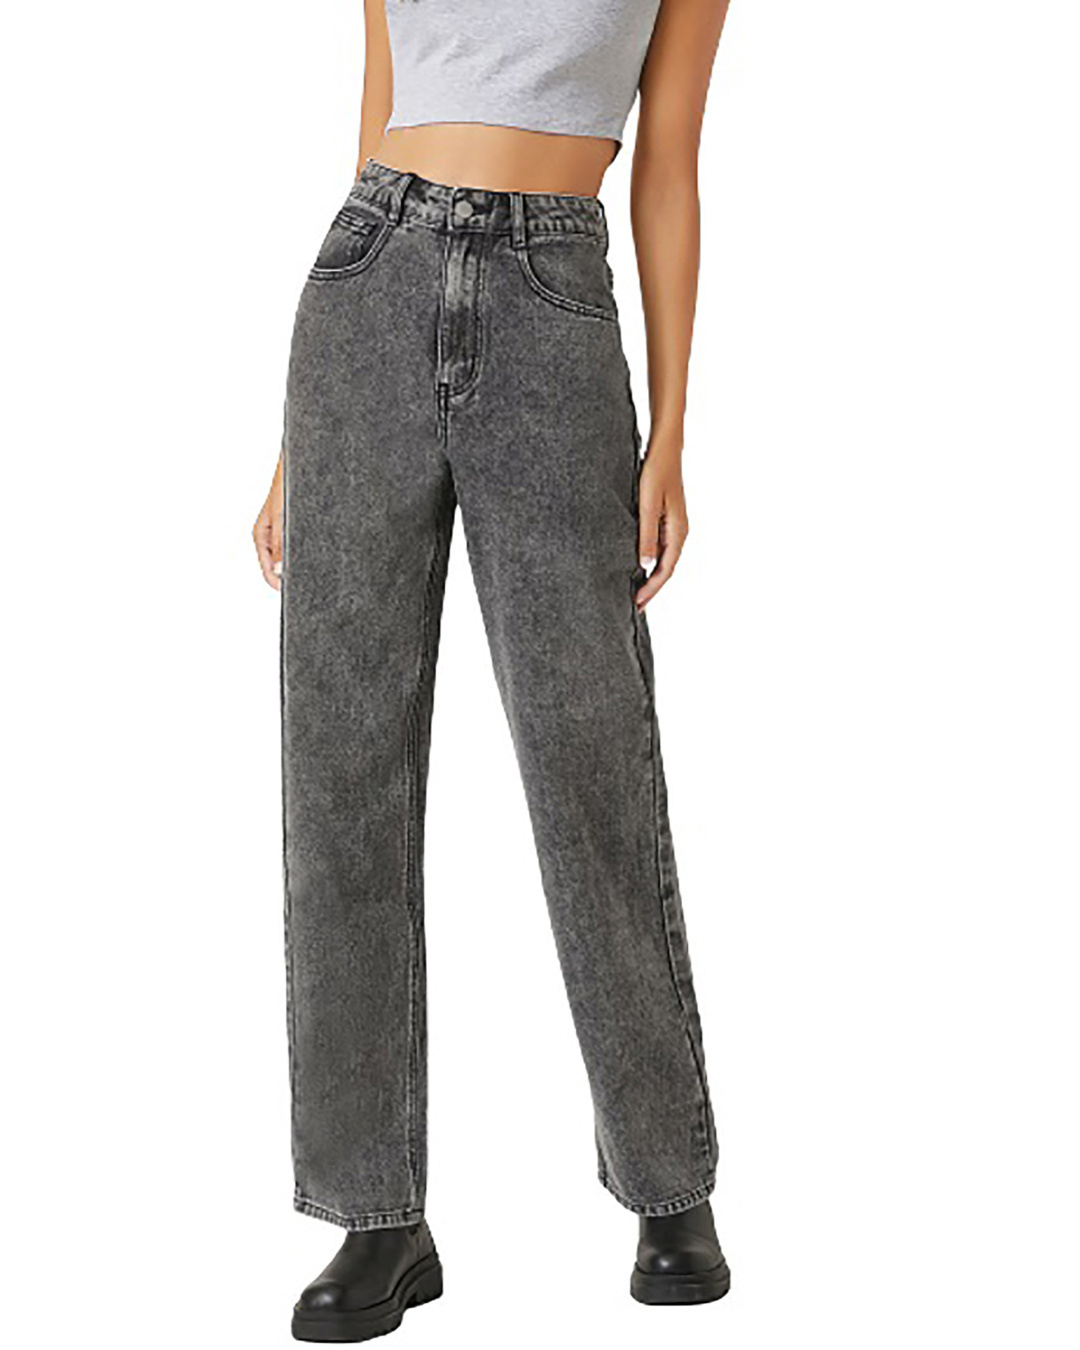 Buy Women's Grey High Rise Loose Fit Jeans Online at Bewakoof